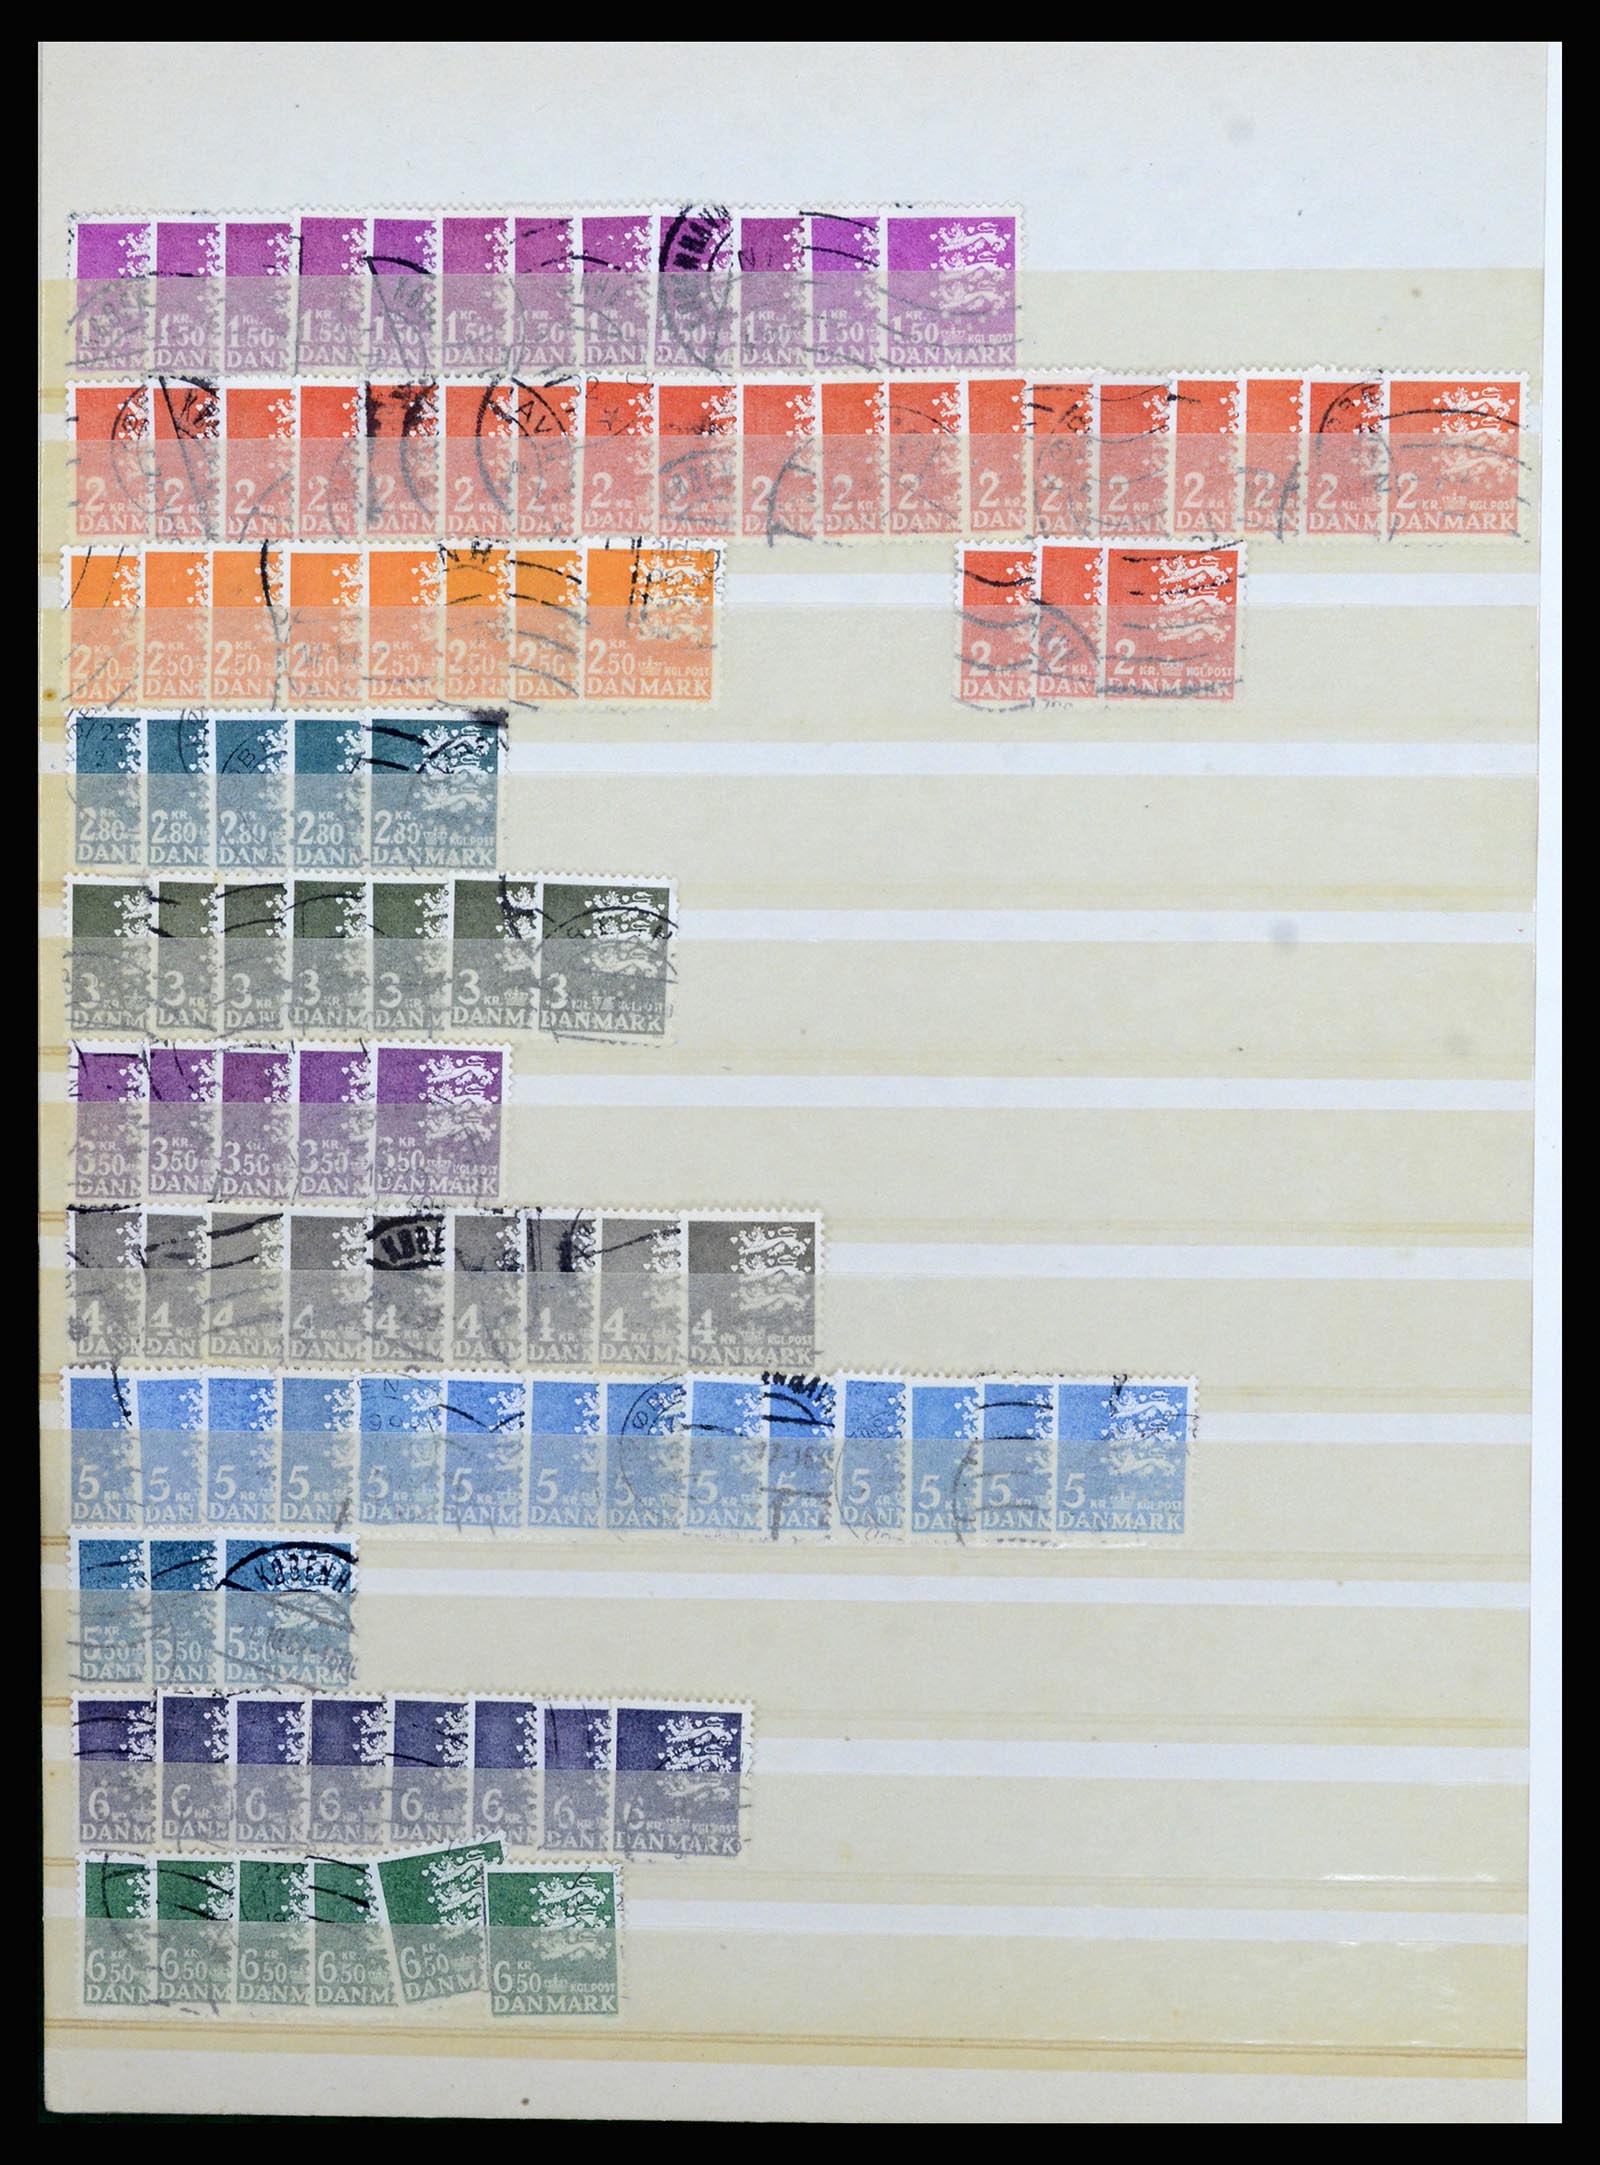 37056 035 - Stamp collection 37056 Denmark perfins.